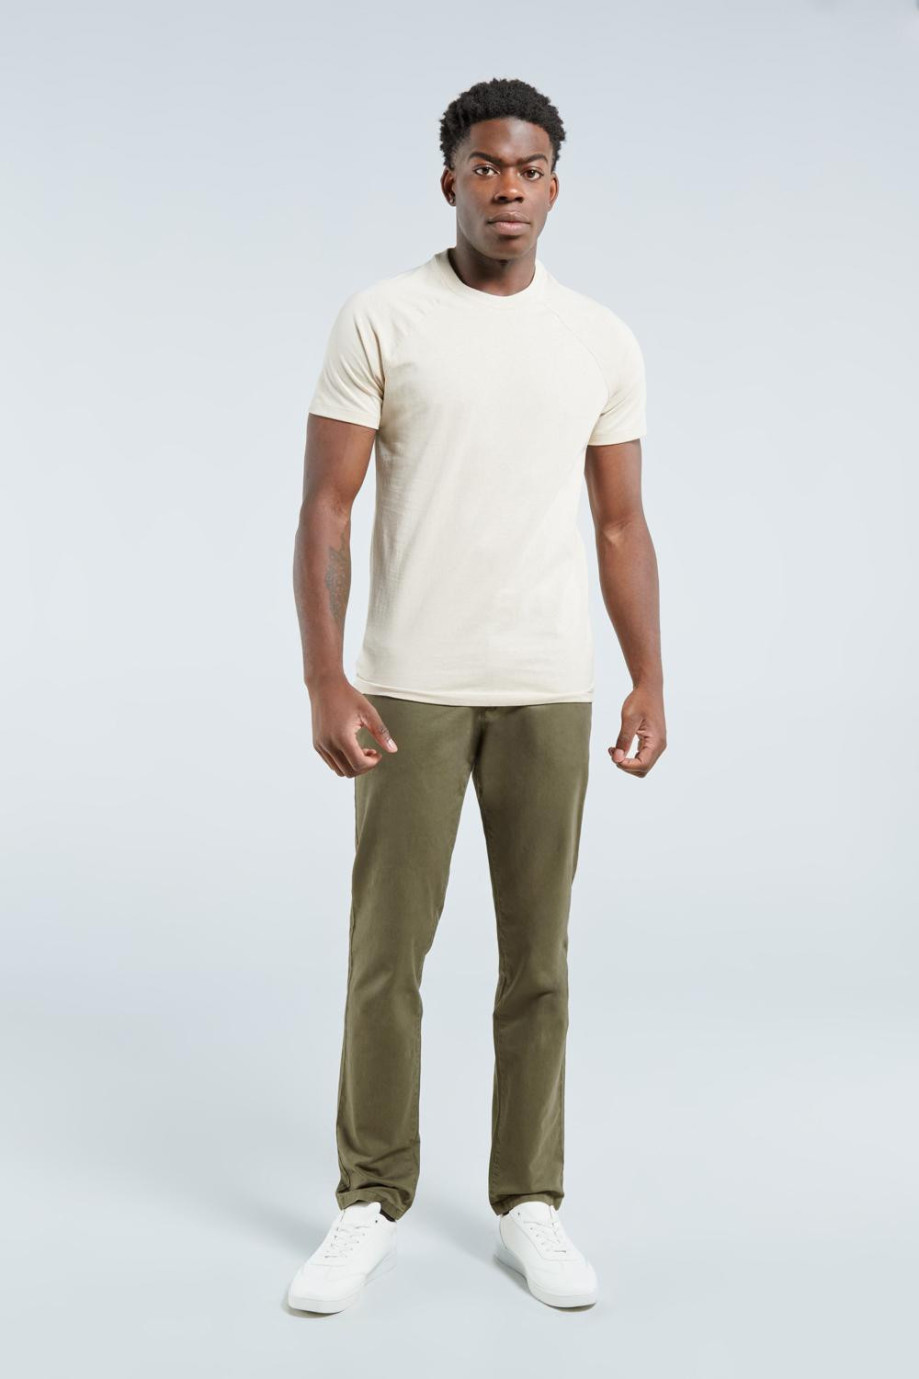 Camiseta kaki clara en algodón con manga ranglan corta